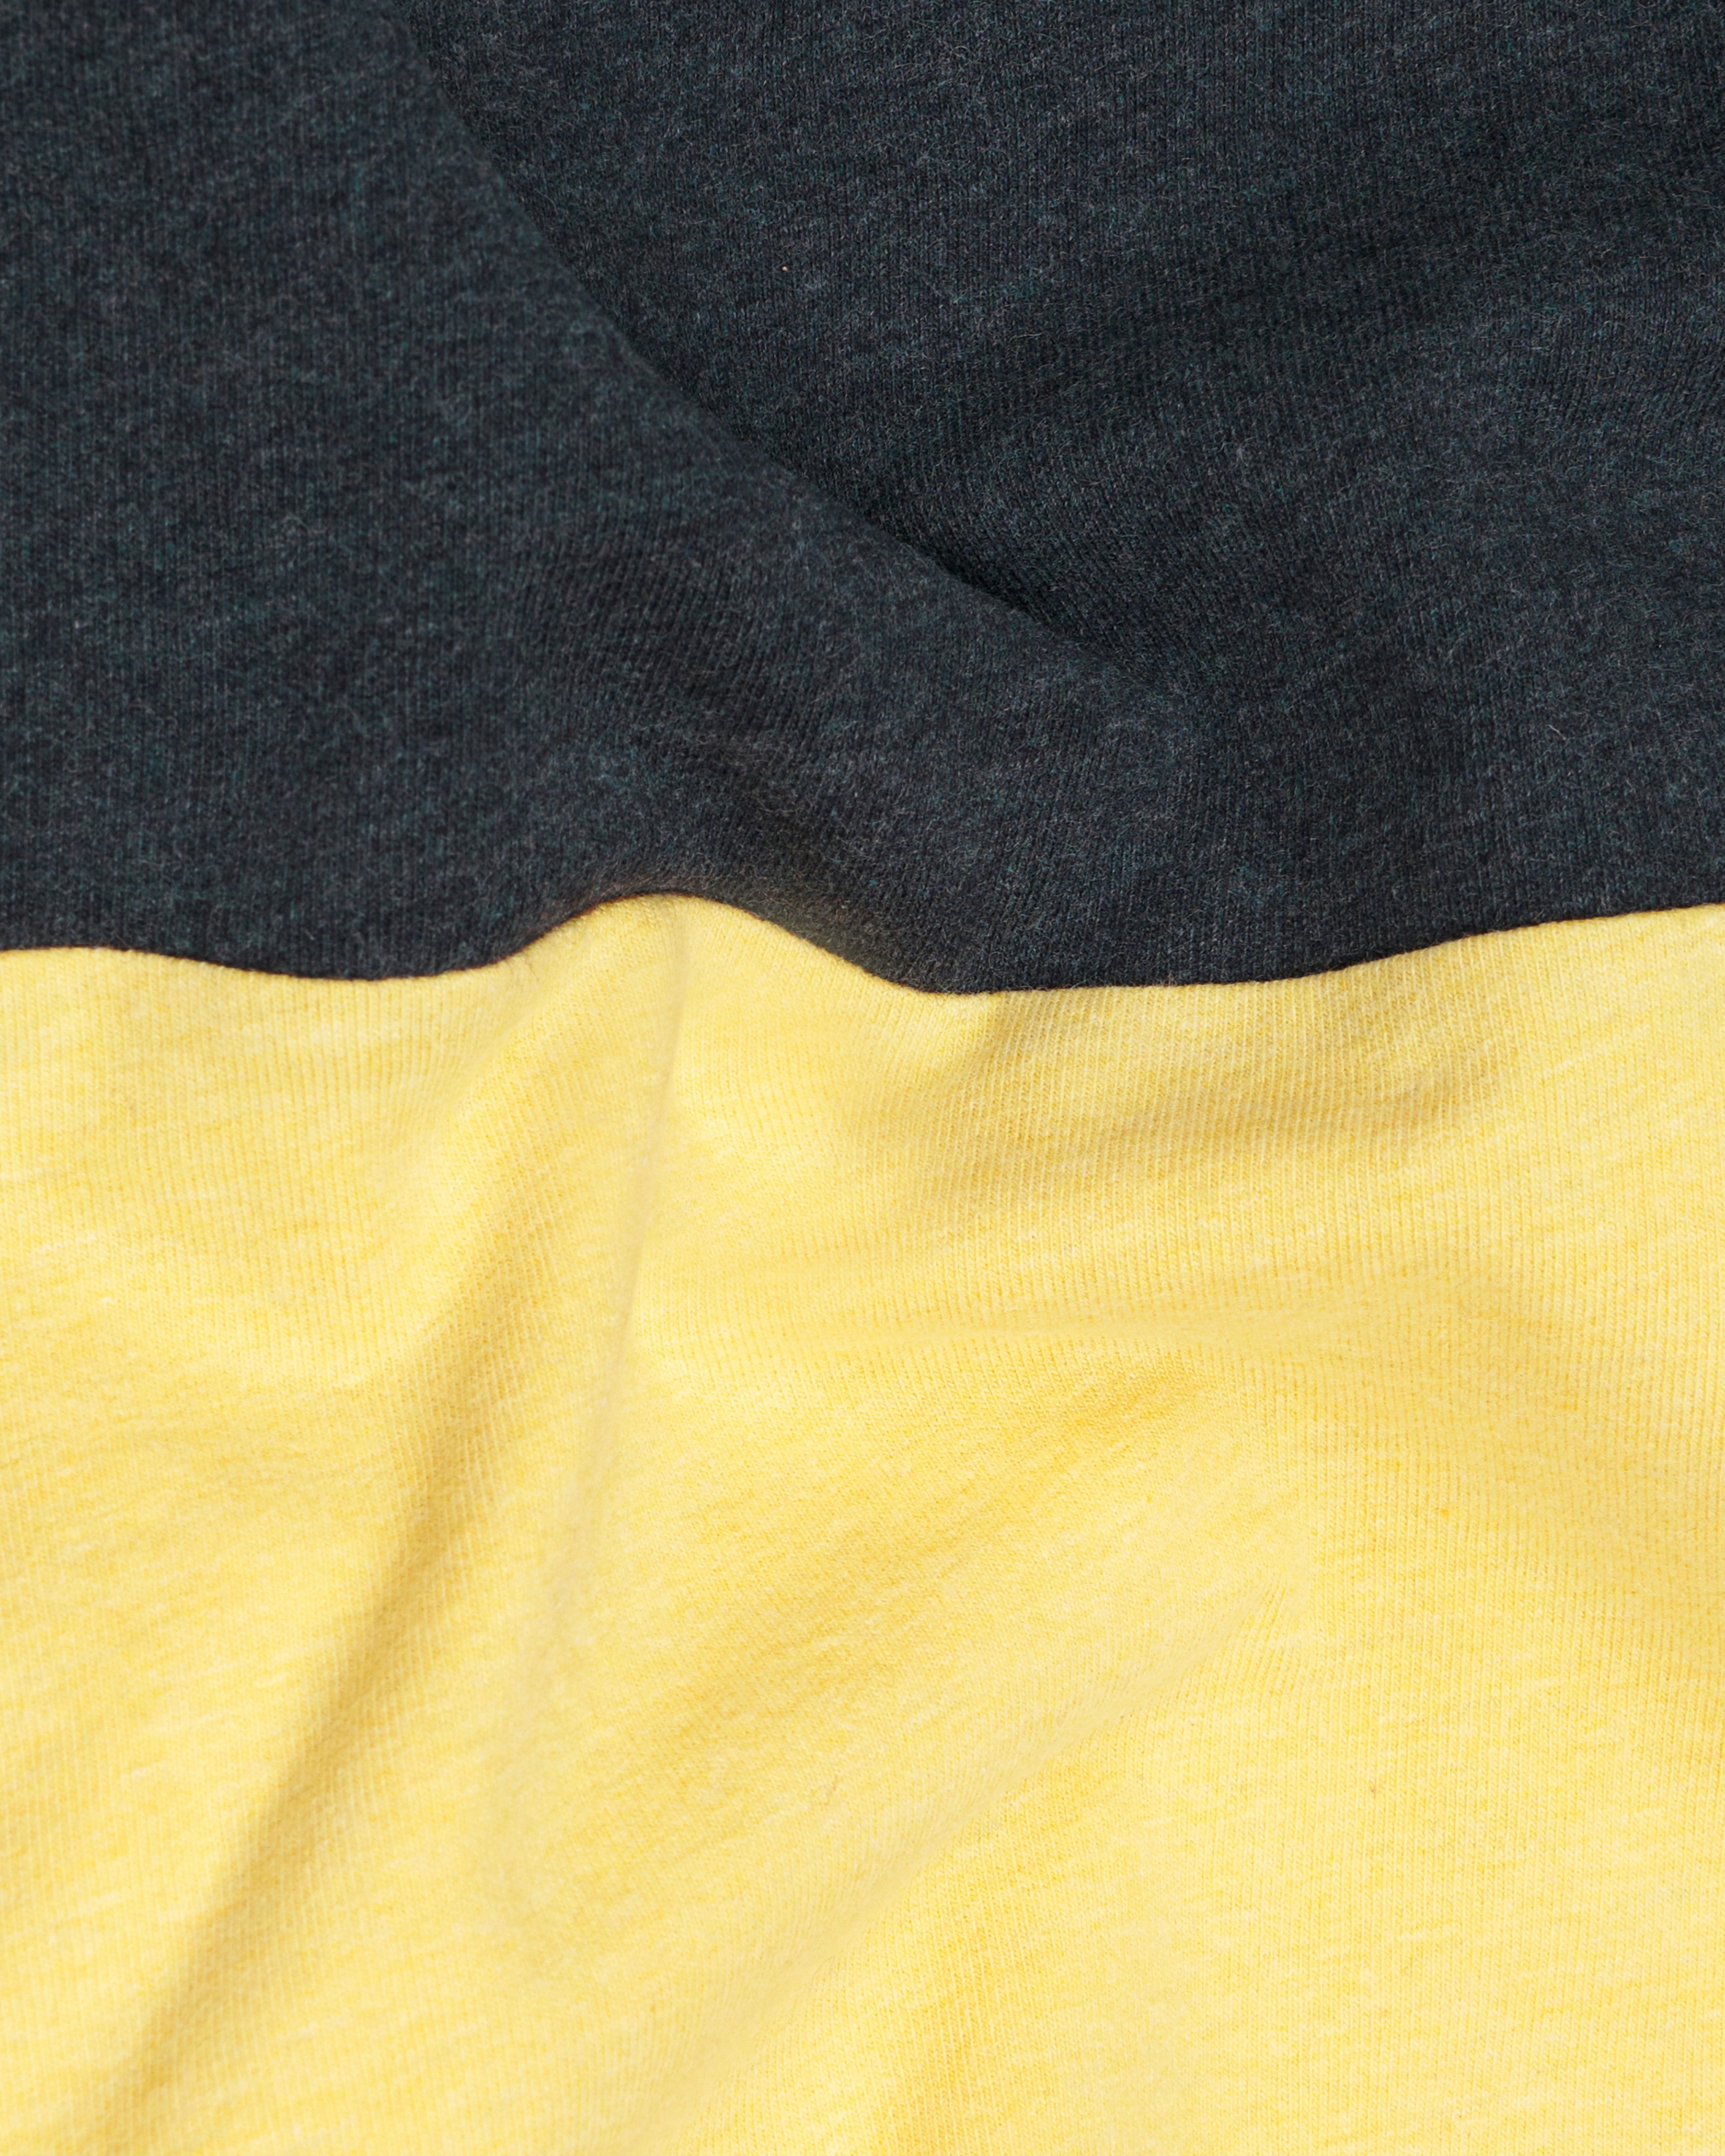 Gunmetal Gray and Marzipan Yellow Premium Cotton T-shirt TS848-S, TS848-M, TS848-L, TS848-XL, TS848-XXL